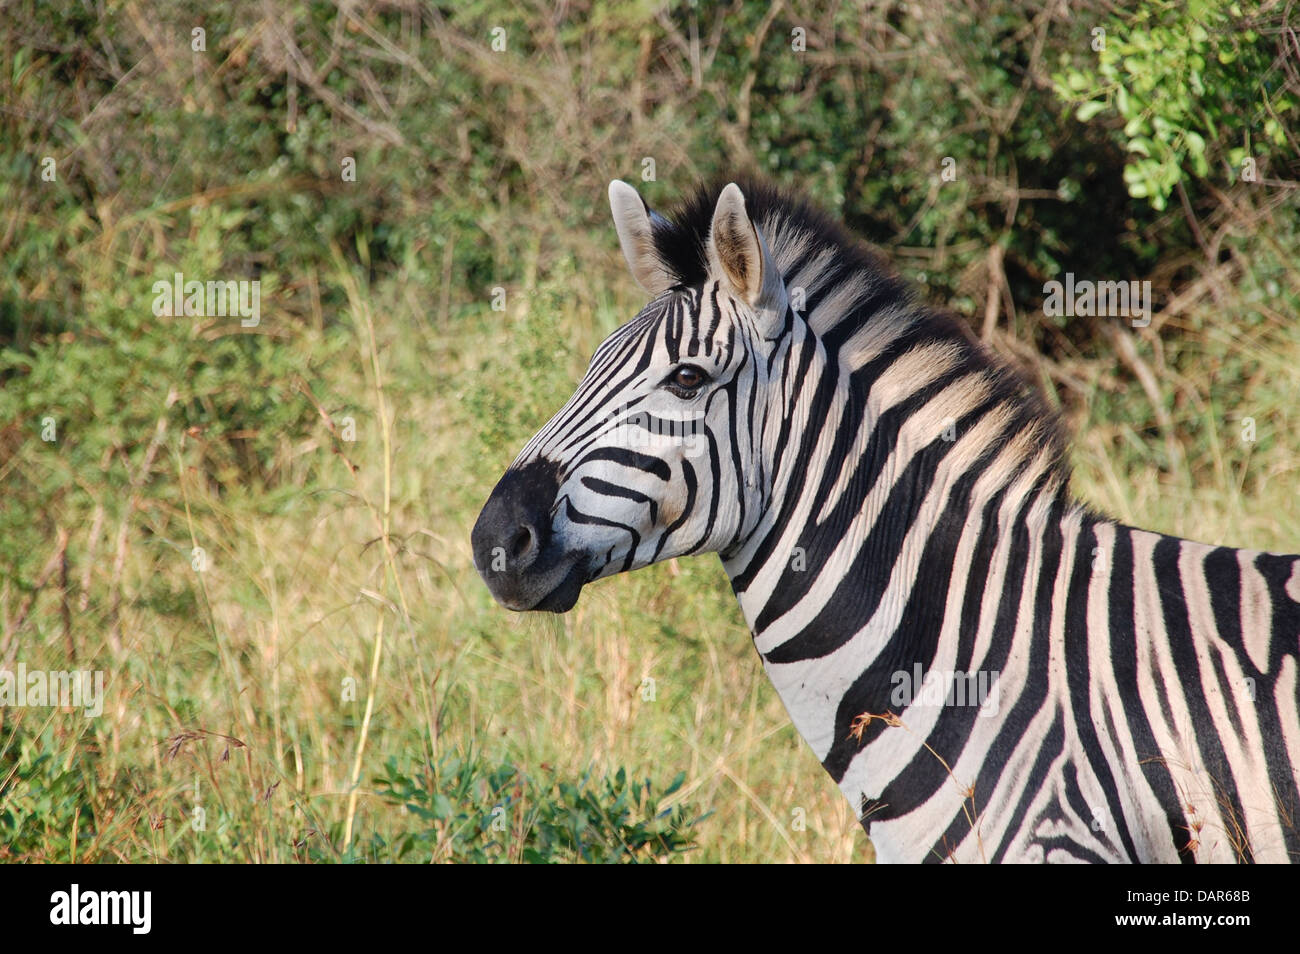 Sud Africa natura selvaggia fauna selvatica animali zebra Foto Stock